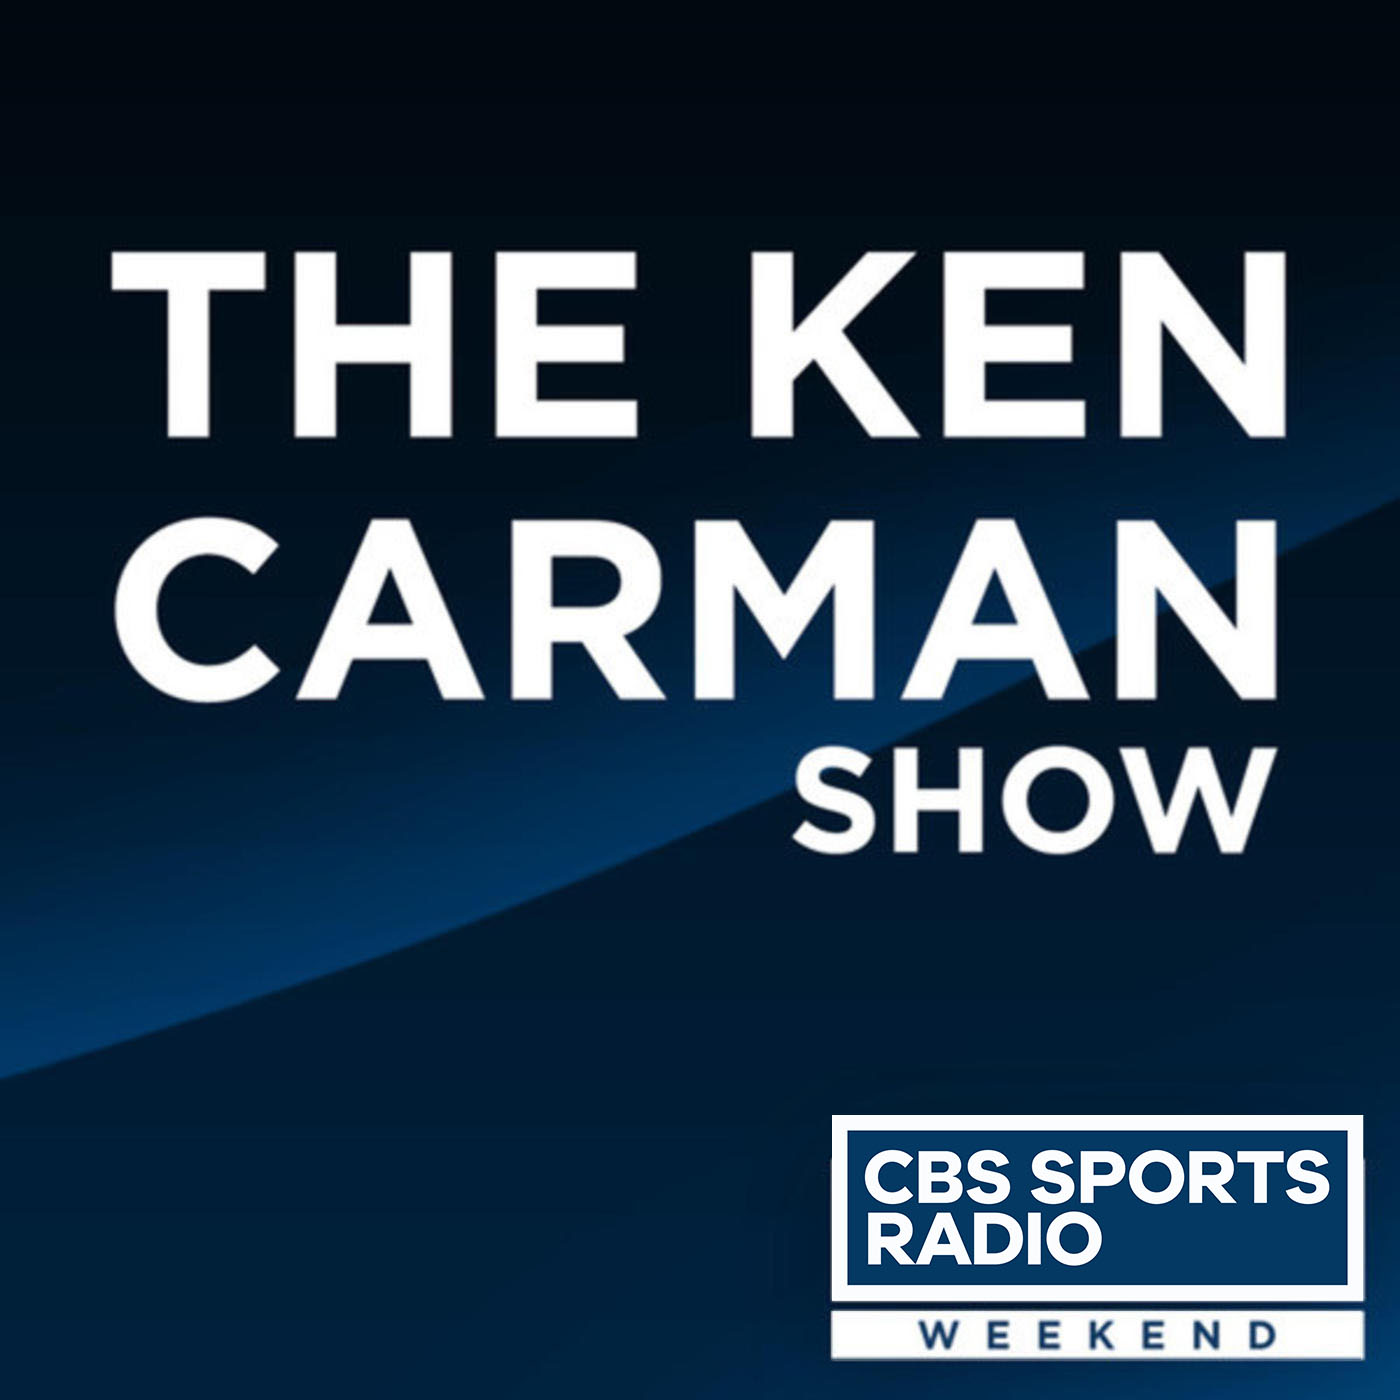 The Ken Carman Show 05-04-19 Hour 1